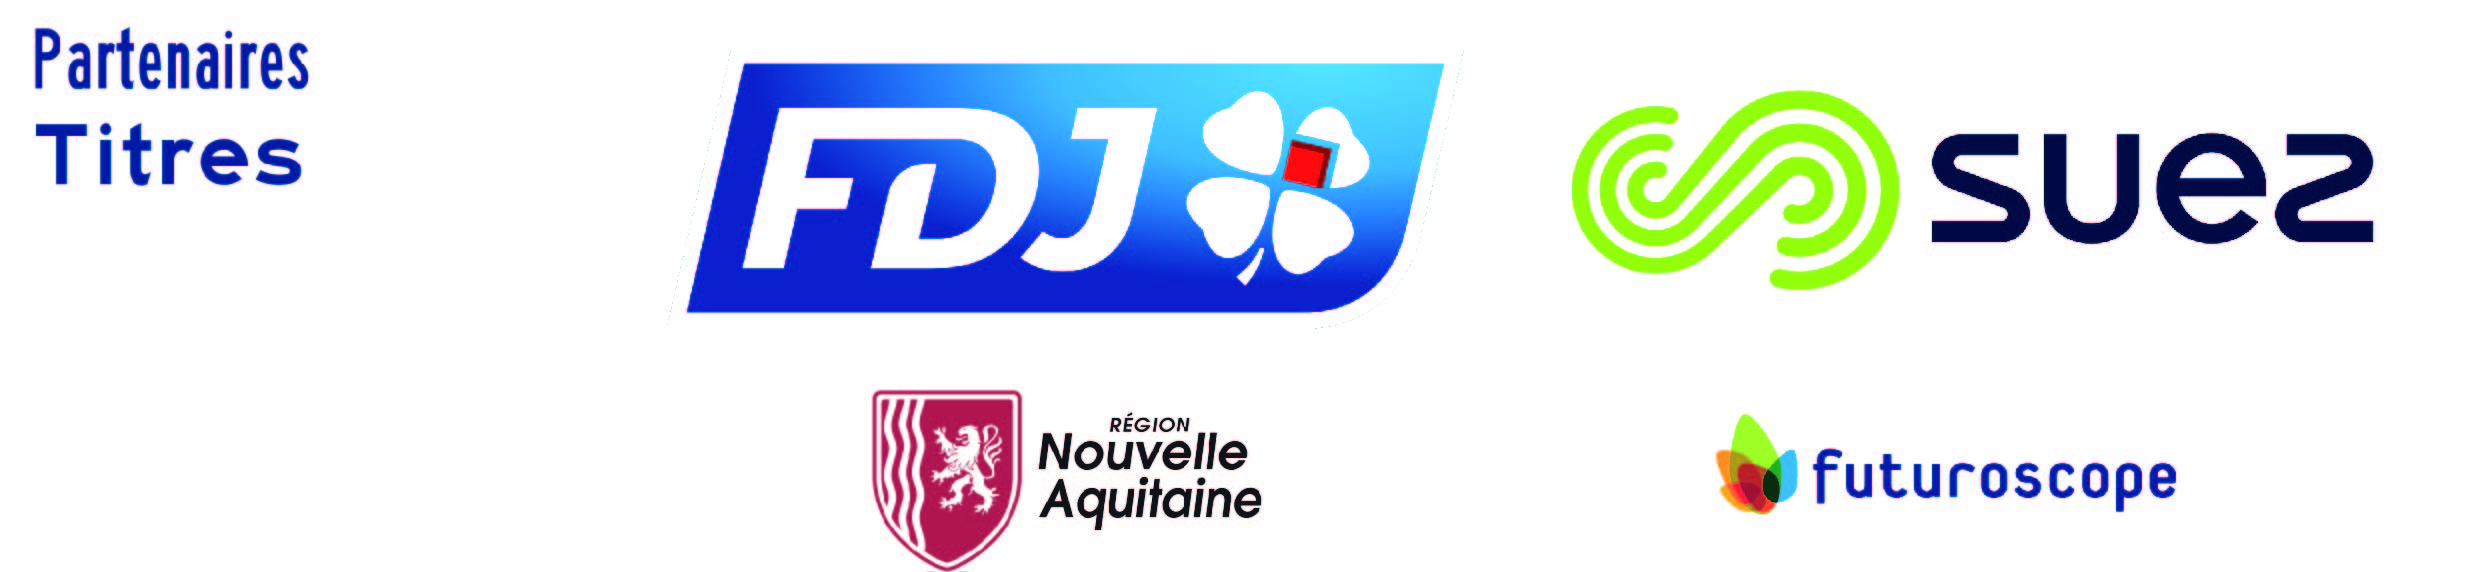 1 FDJ Nouvelle Aquitaine Futuroscope Partenaires Titres